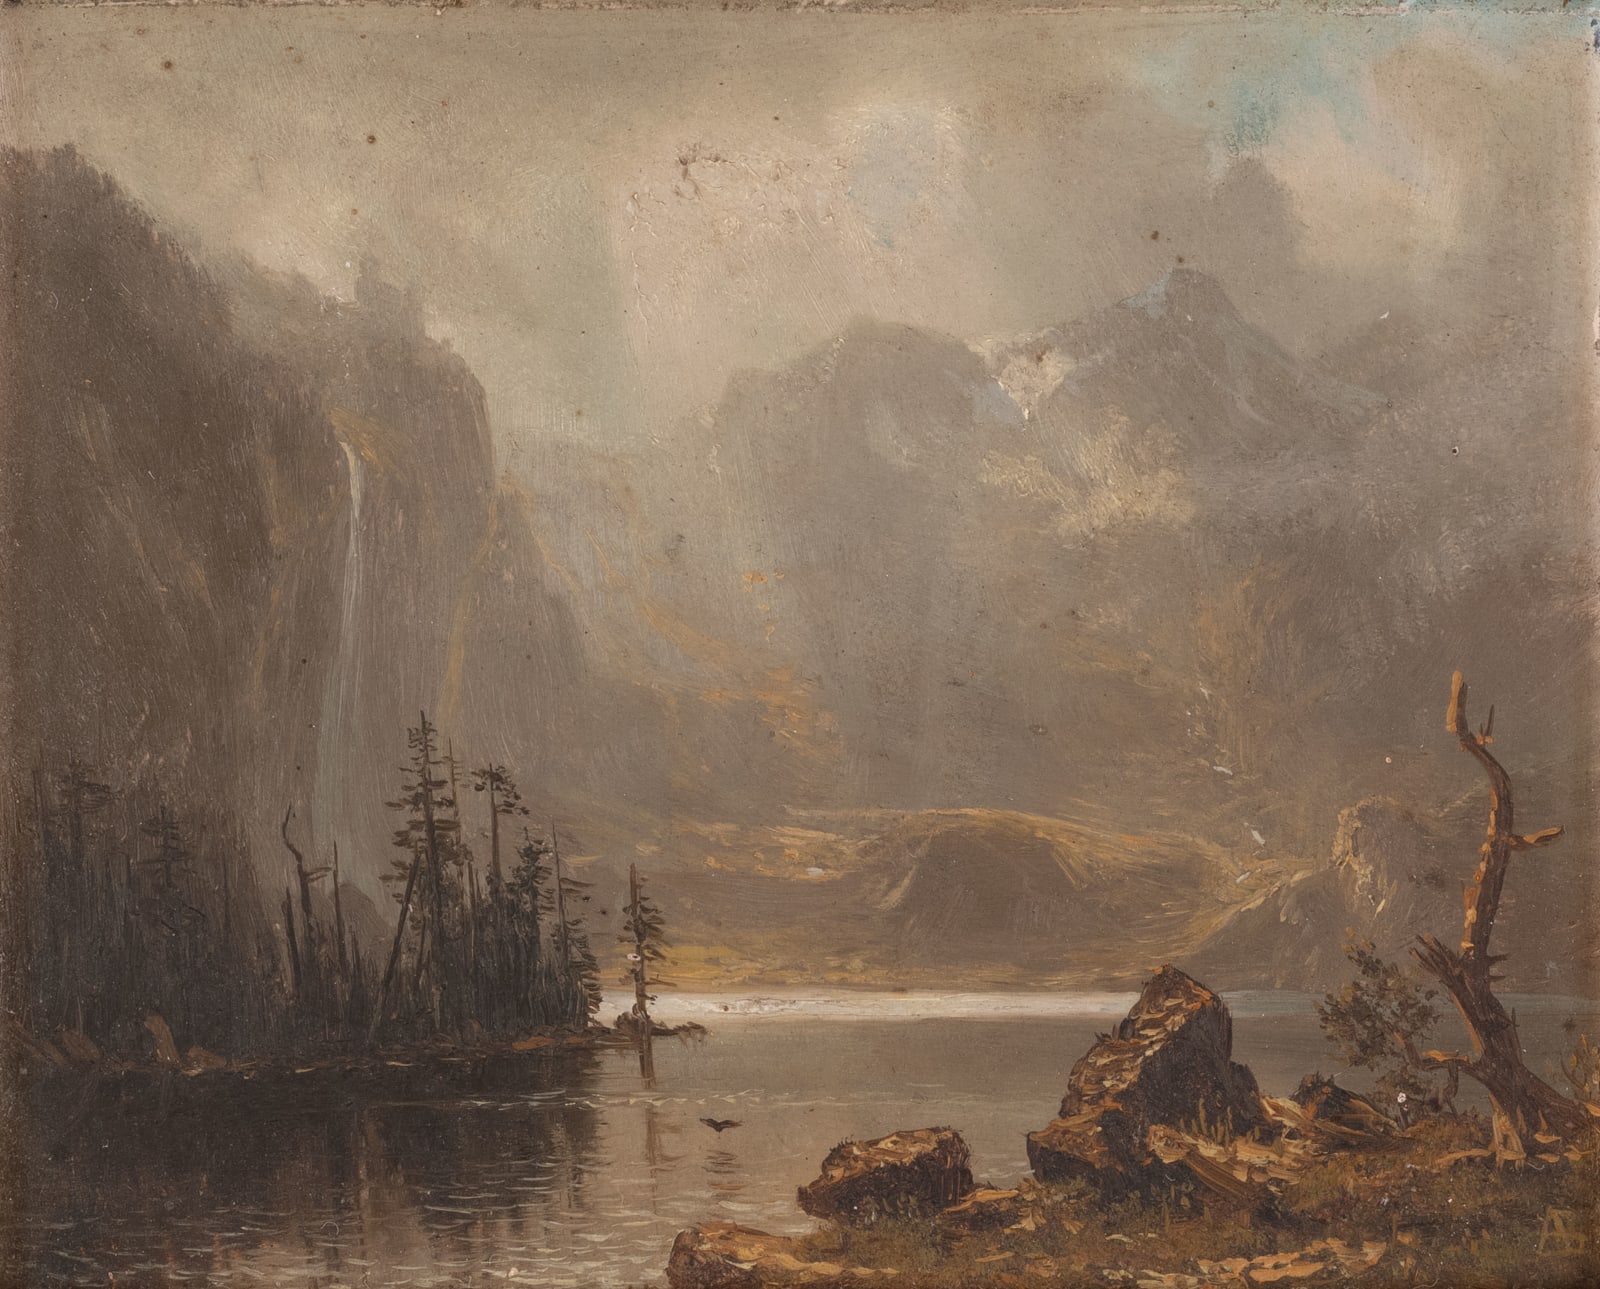 Albert Bierstadt, Mountain Landscape, undated